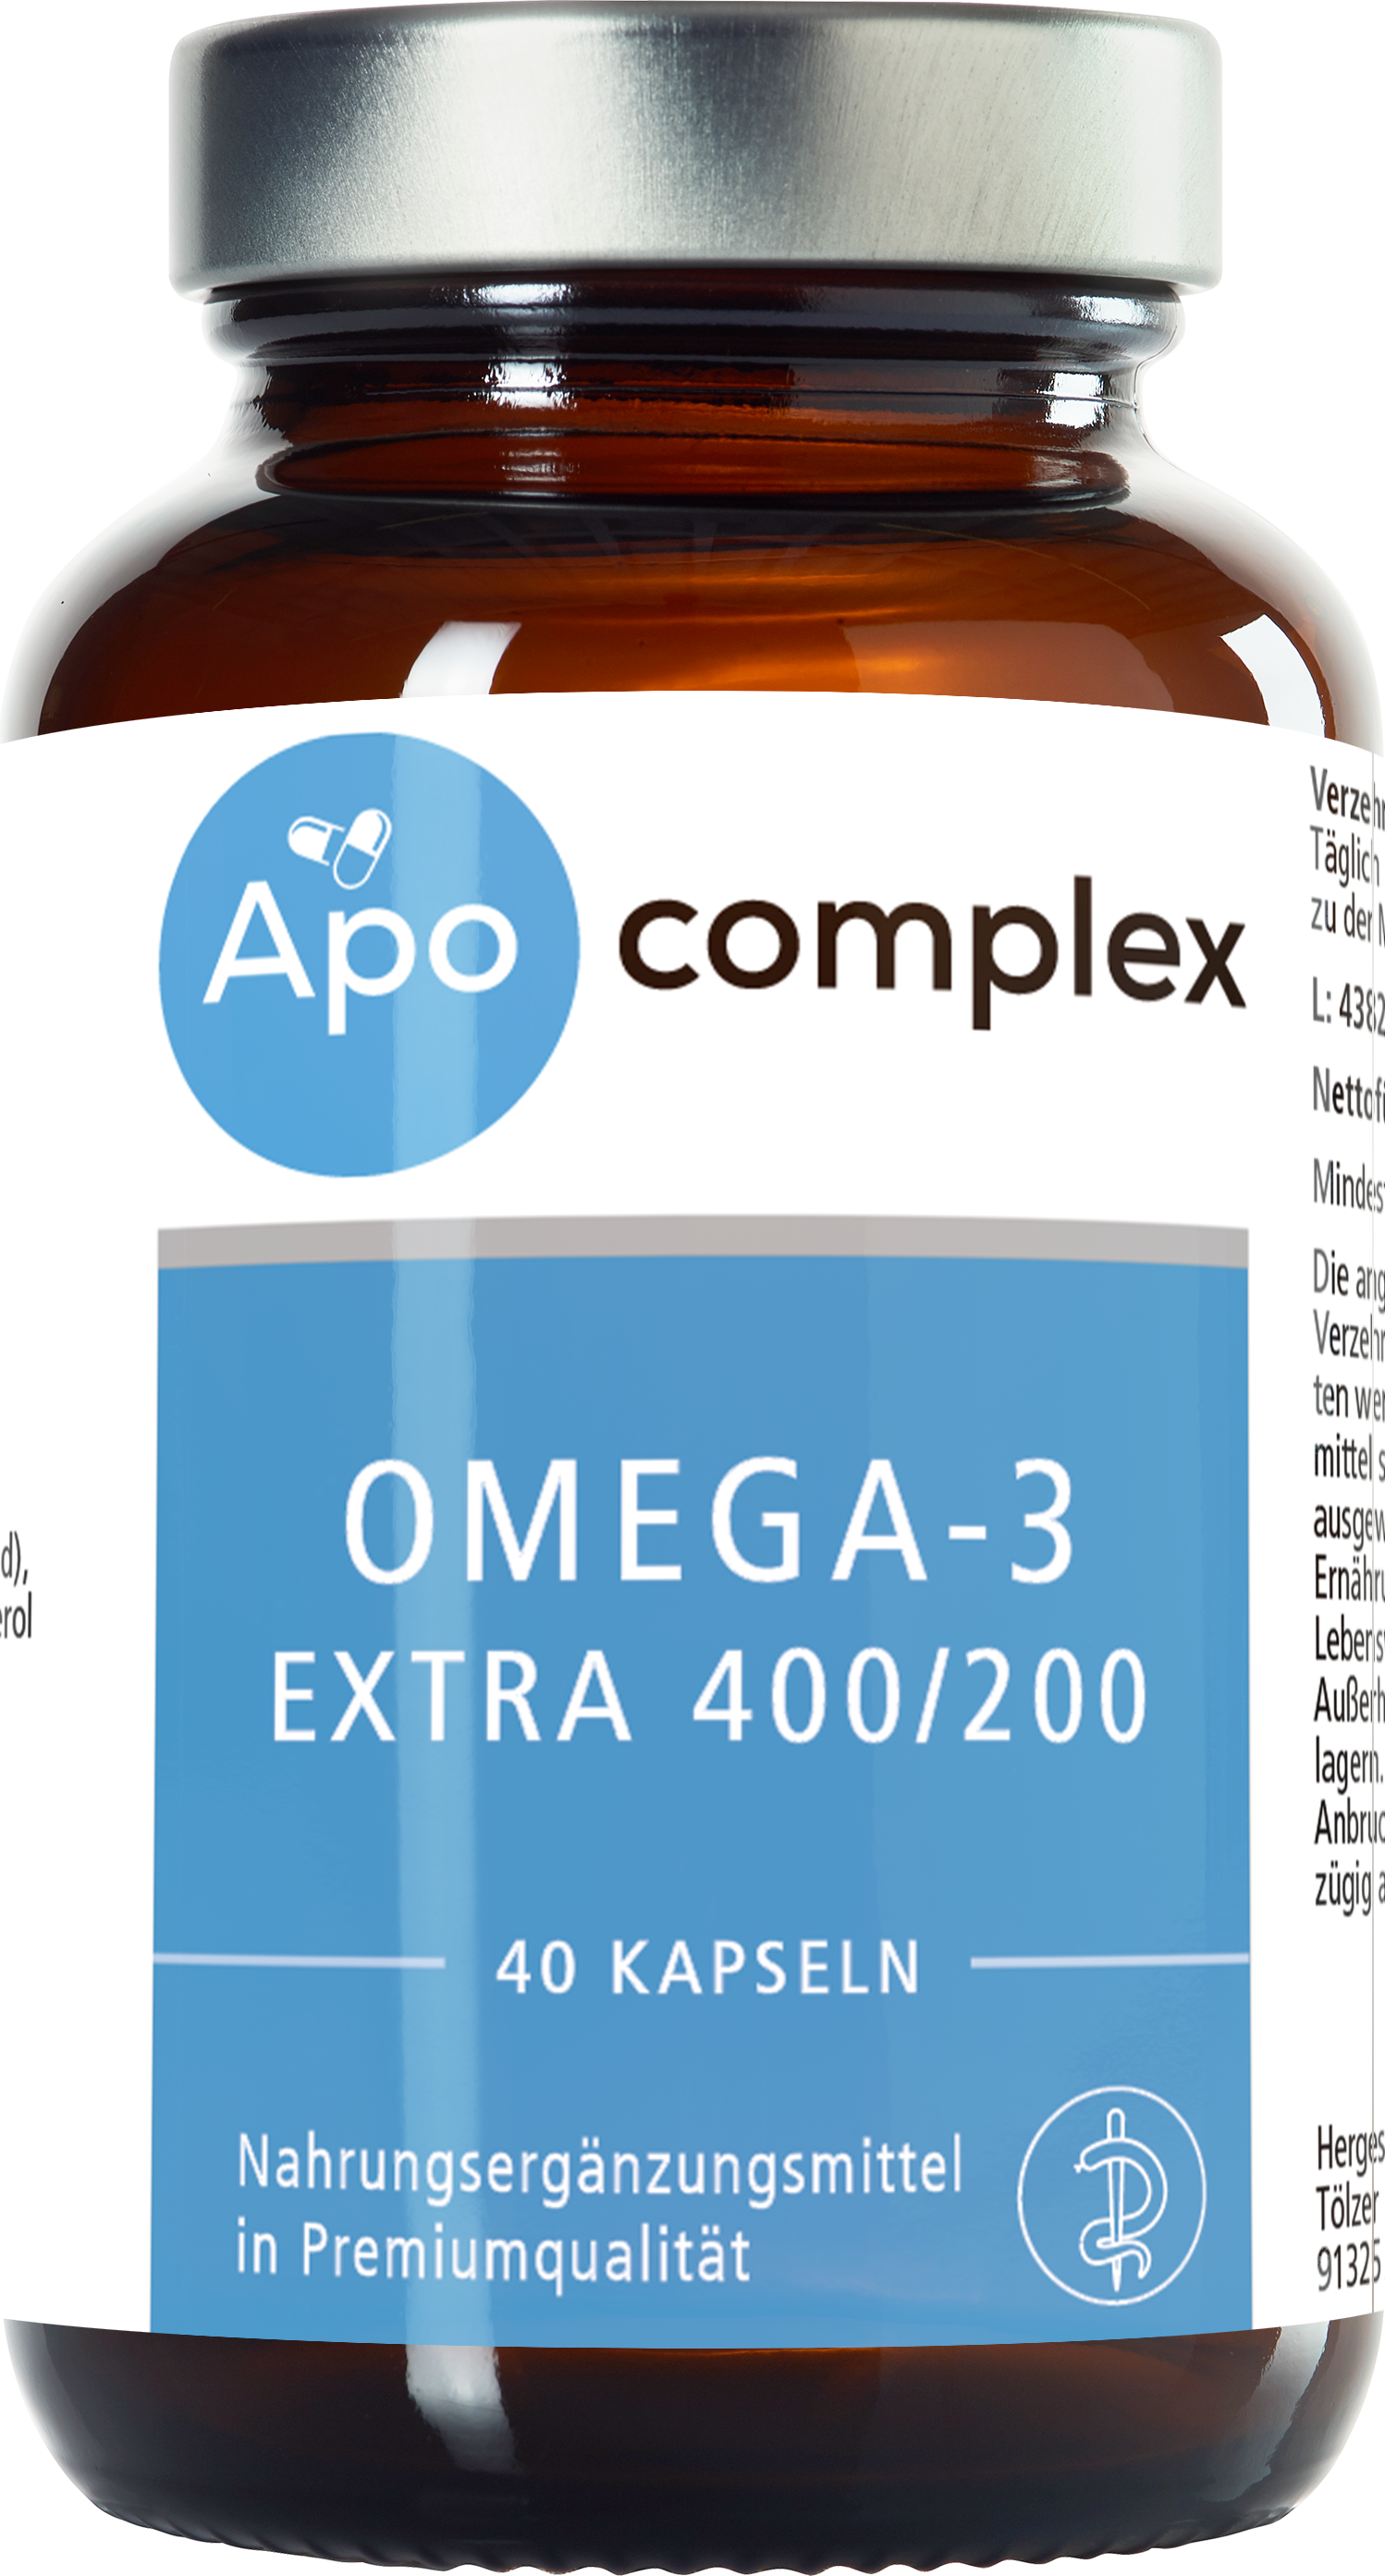 Apocomplex OMEGA 3 EXTRA 400/200